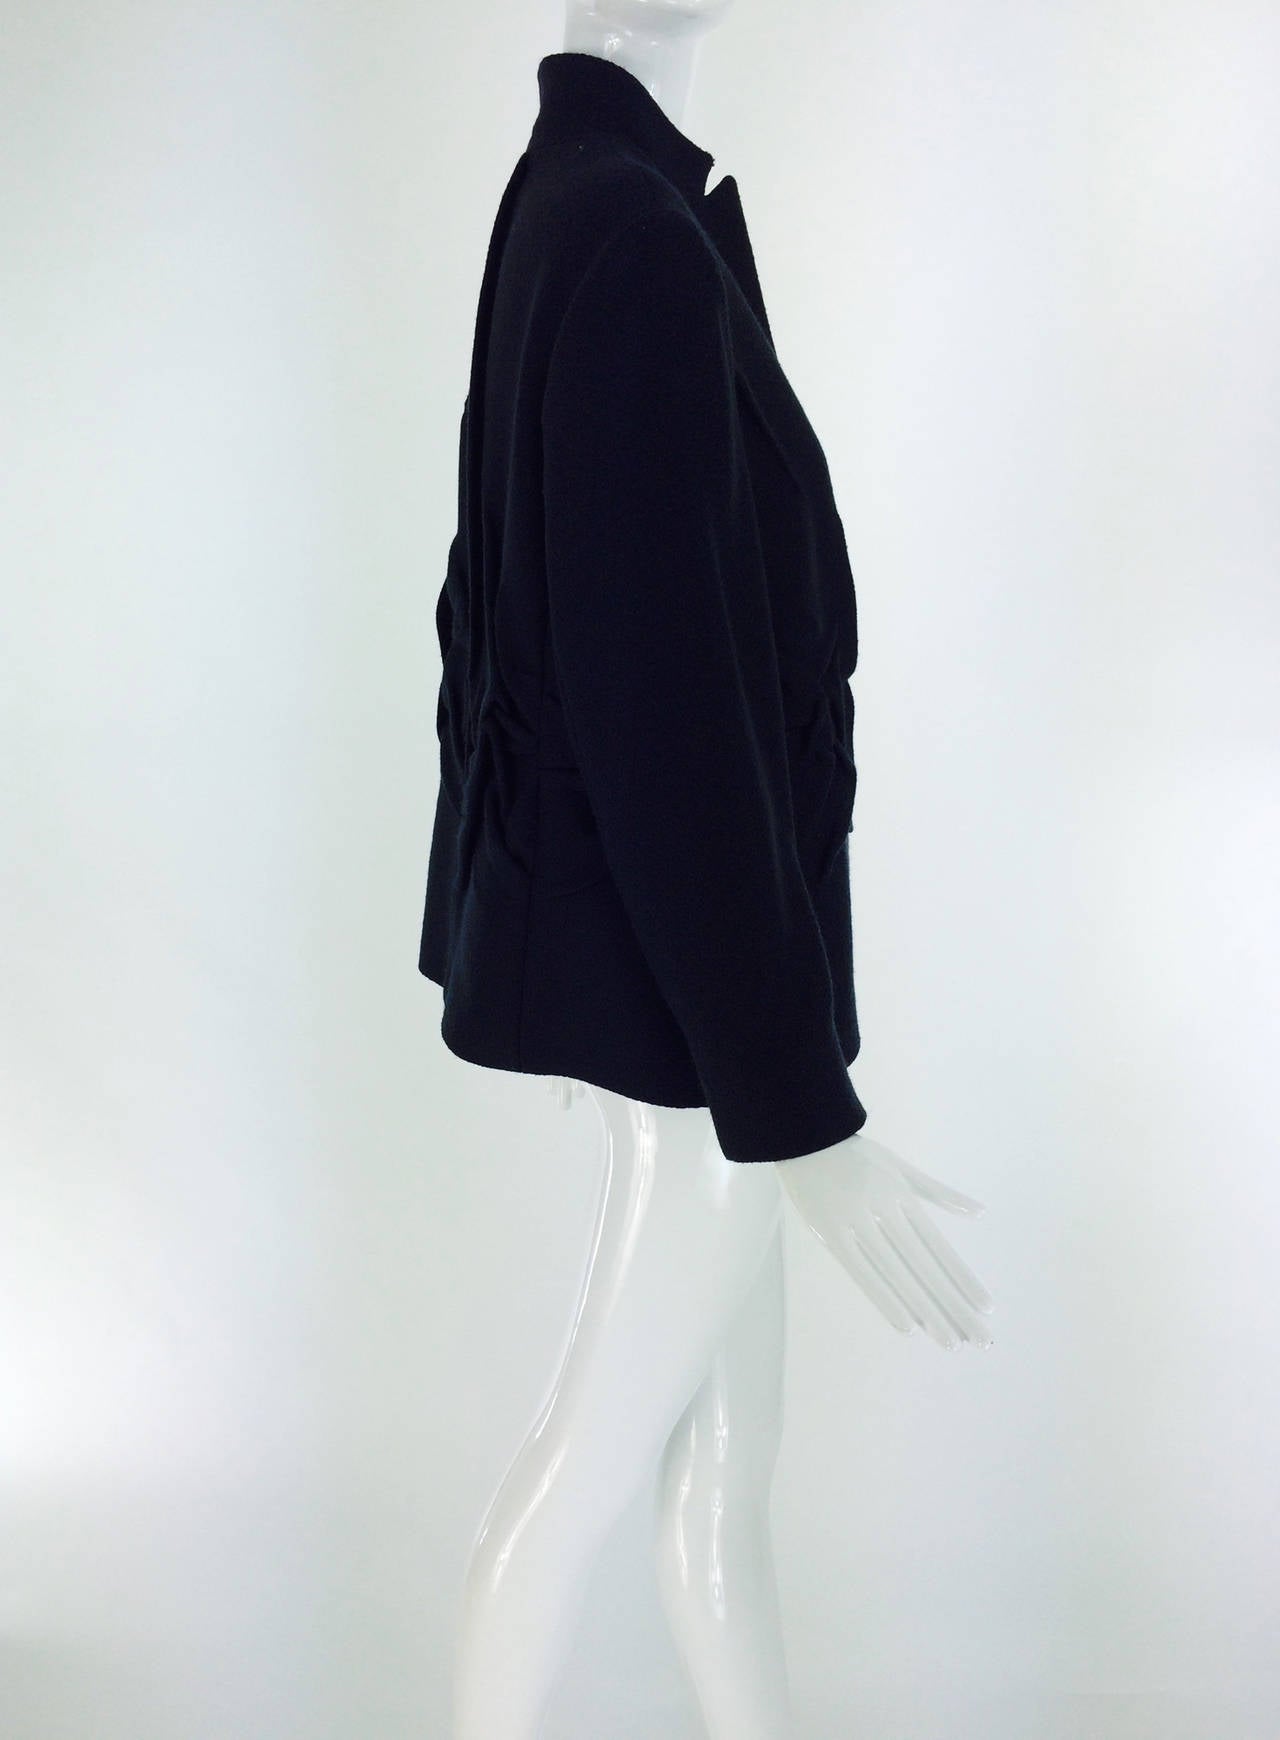 Women's Jil Sander black wool jacket with 3 D sculpted panels